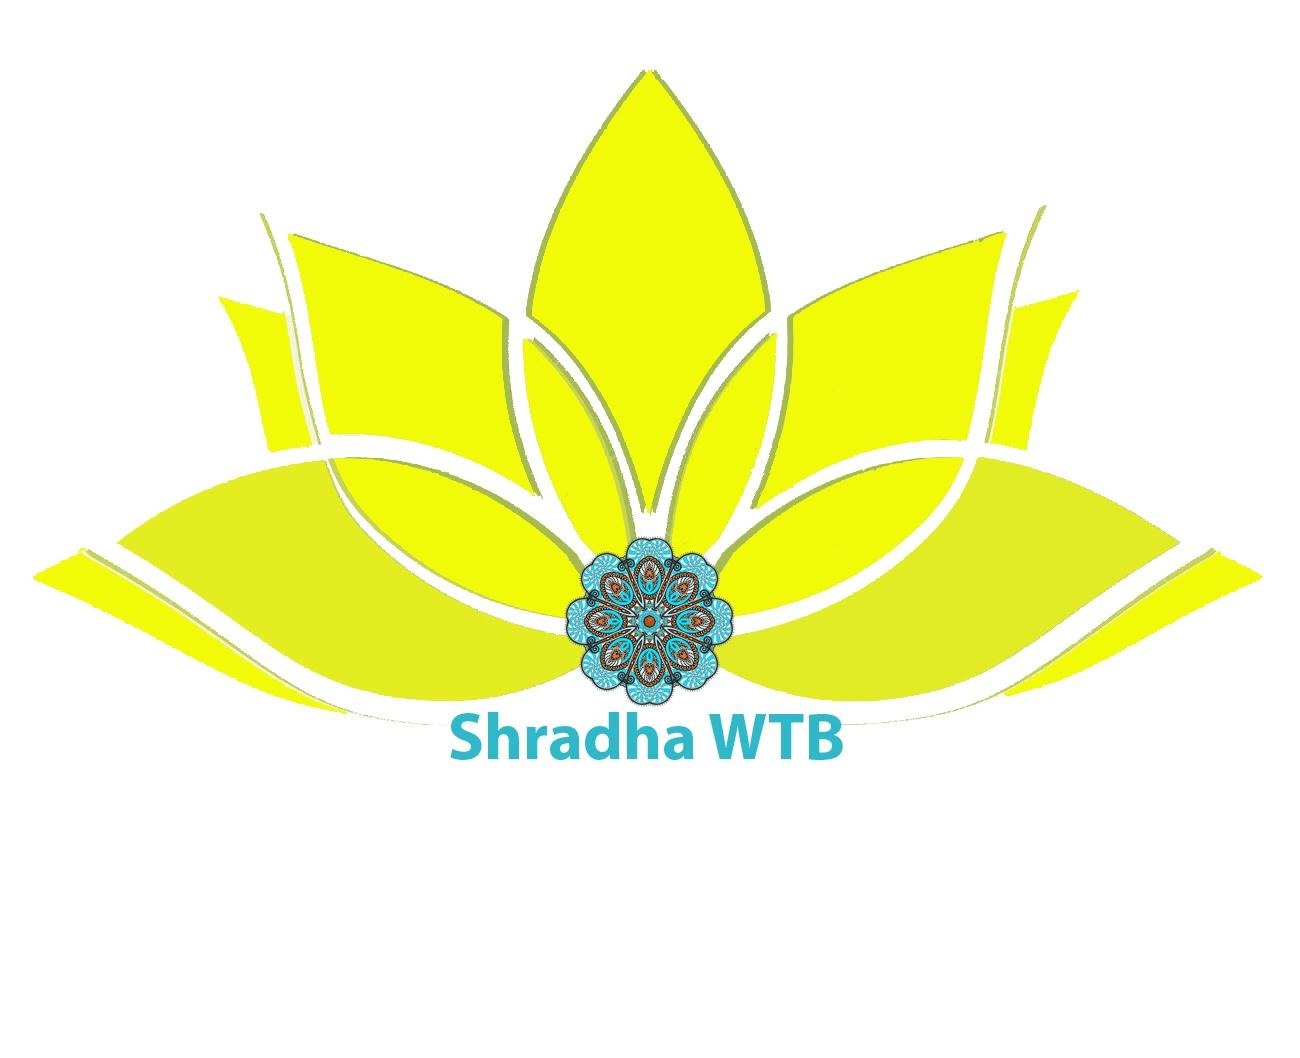 WTB Logo - My New Lovely Logo! Shradha WTB Logo | Shradha Wtb